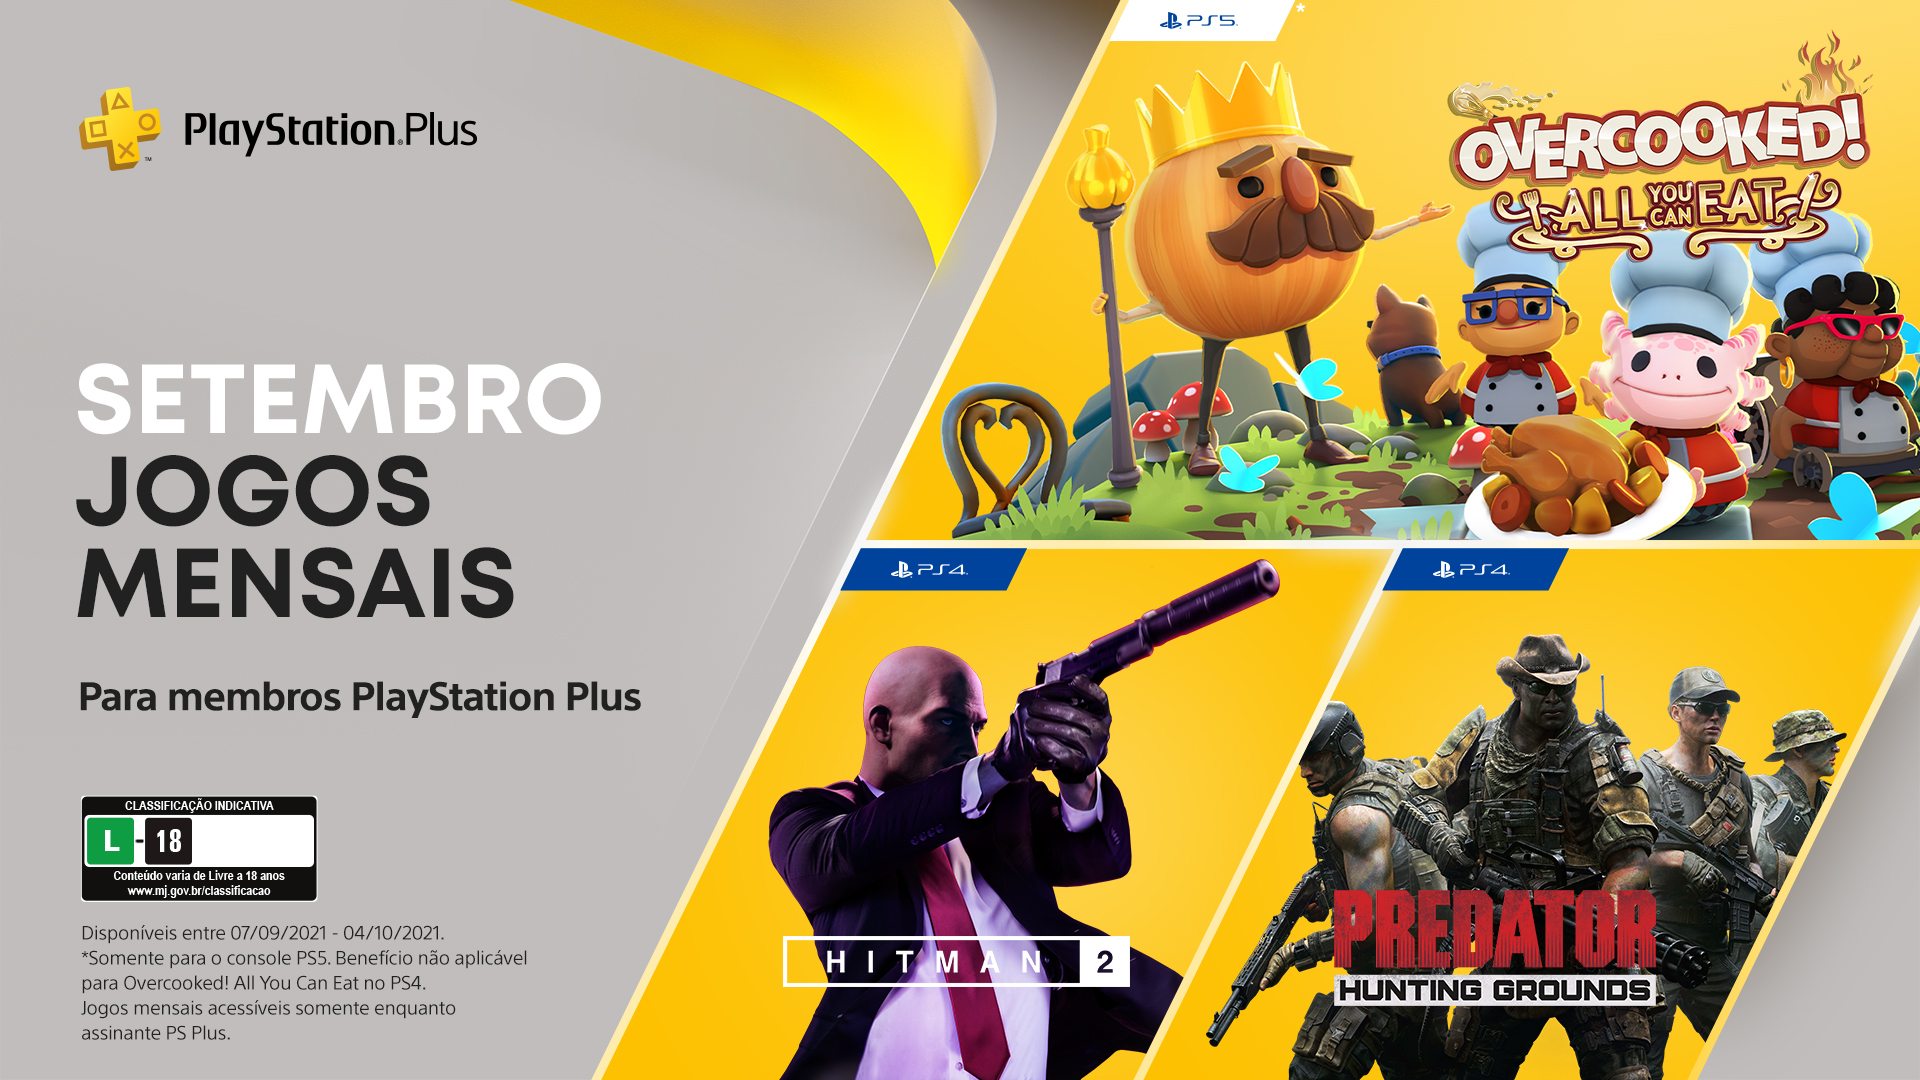 Catálogo de Jogos PlayStation Plus: confira os jogos de novembro para PS5 e  PS4 - GameBlast